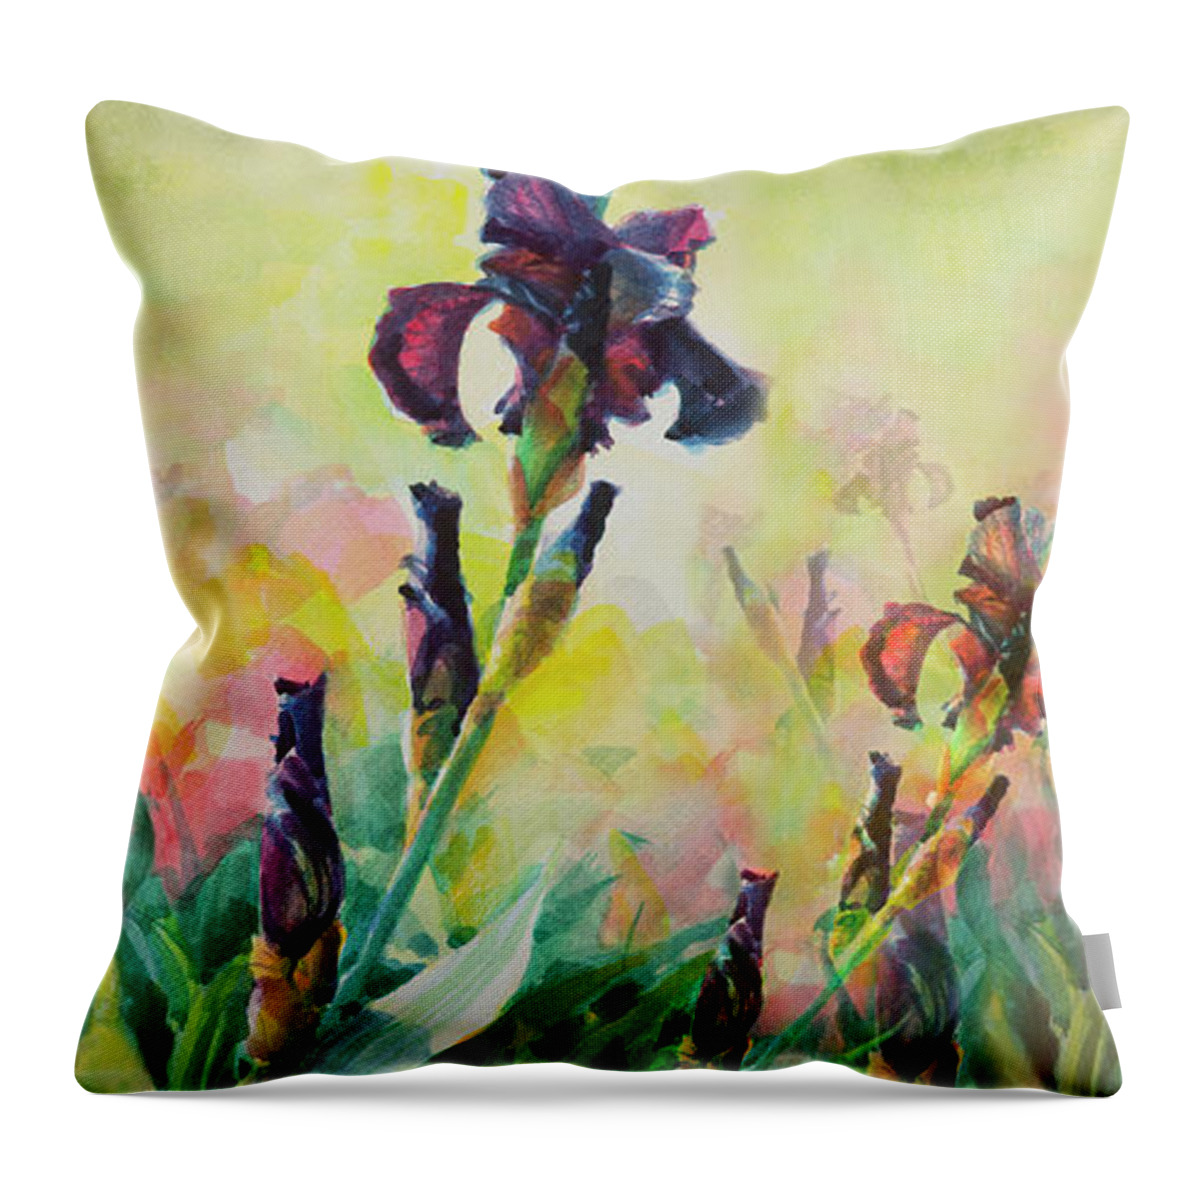 Iris Throw Pillow featuring the digital art Mirrored Purple Iris by Steve Henderson